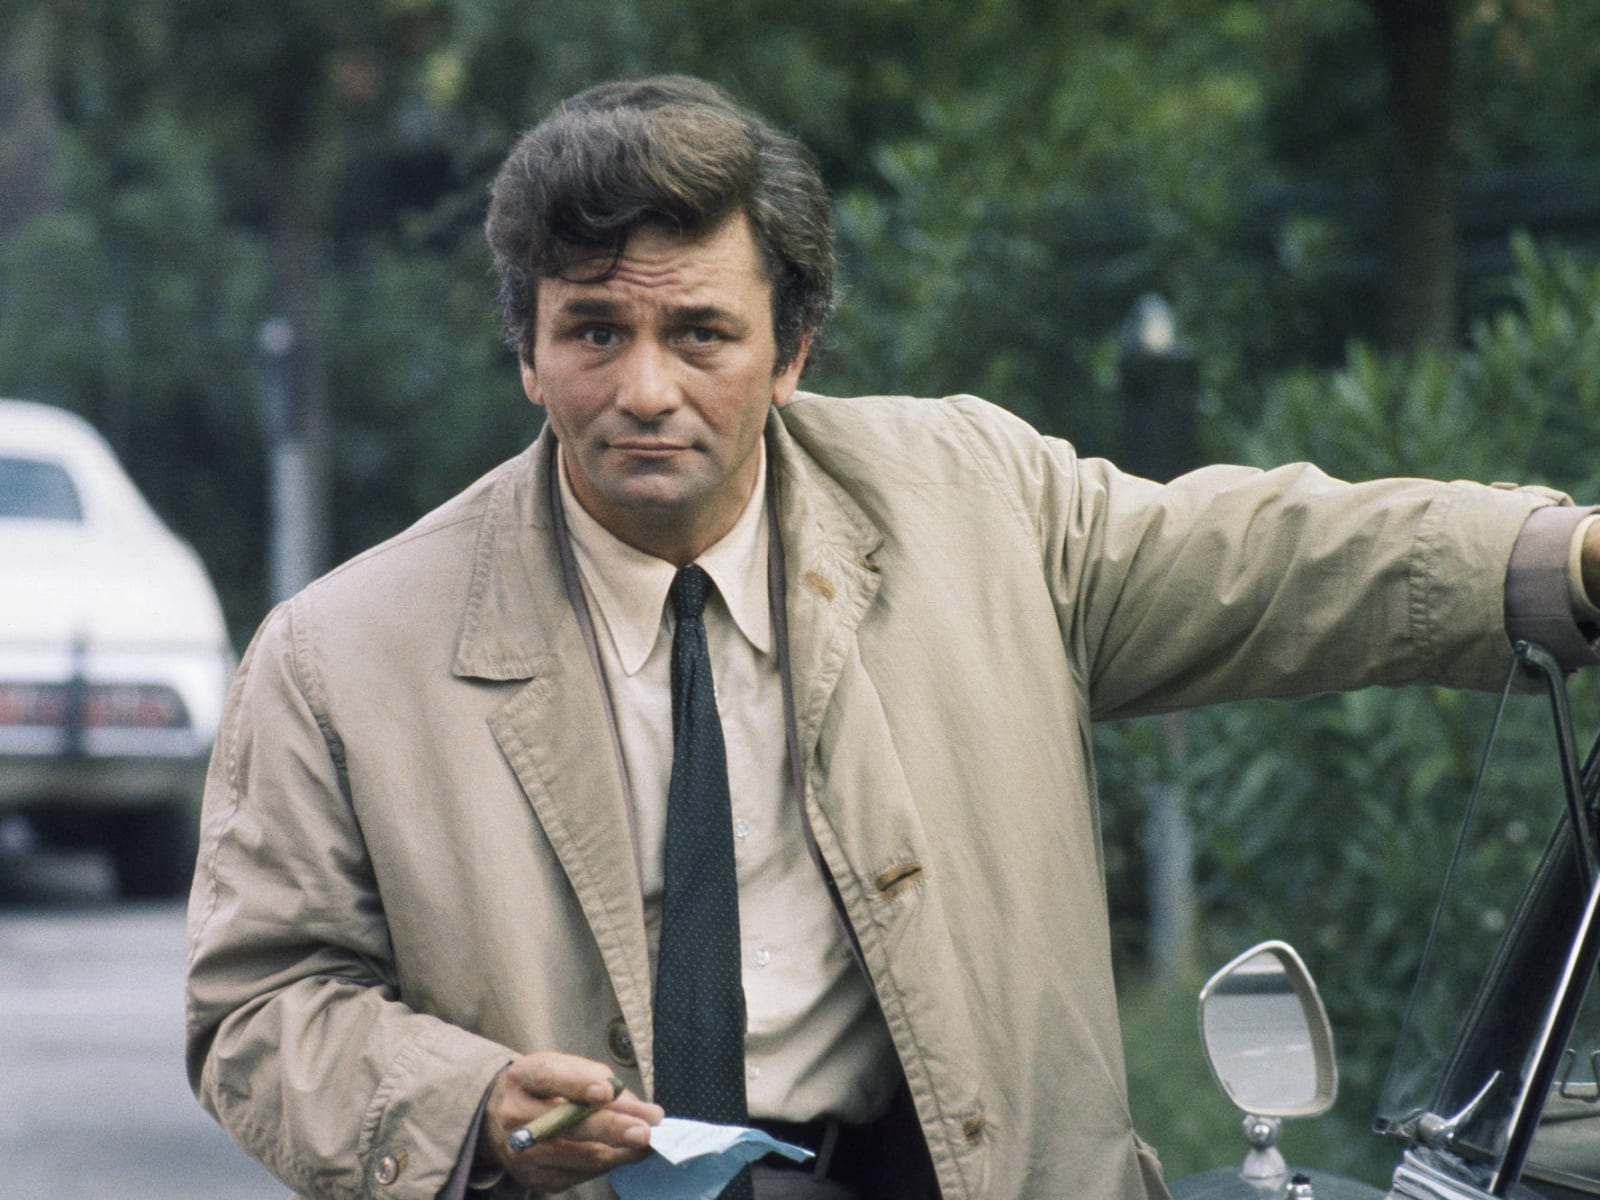 Peter Falk, TV's rumpled Columbo, has died - The San Diego Union-Tribune